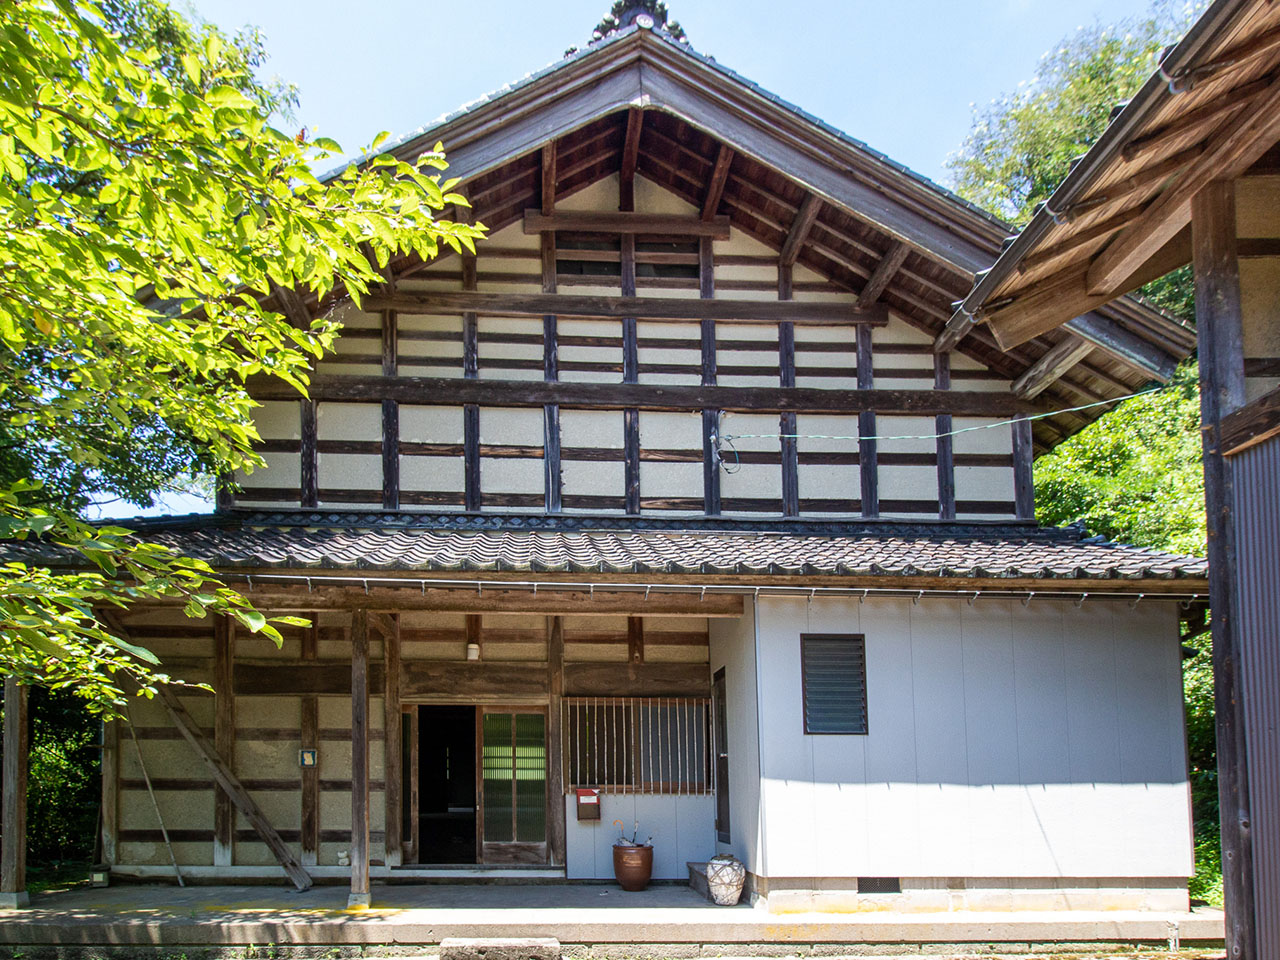 KORYOYA | Traditional Japanese Houses for sale in rural Japan